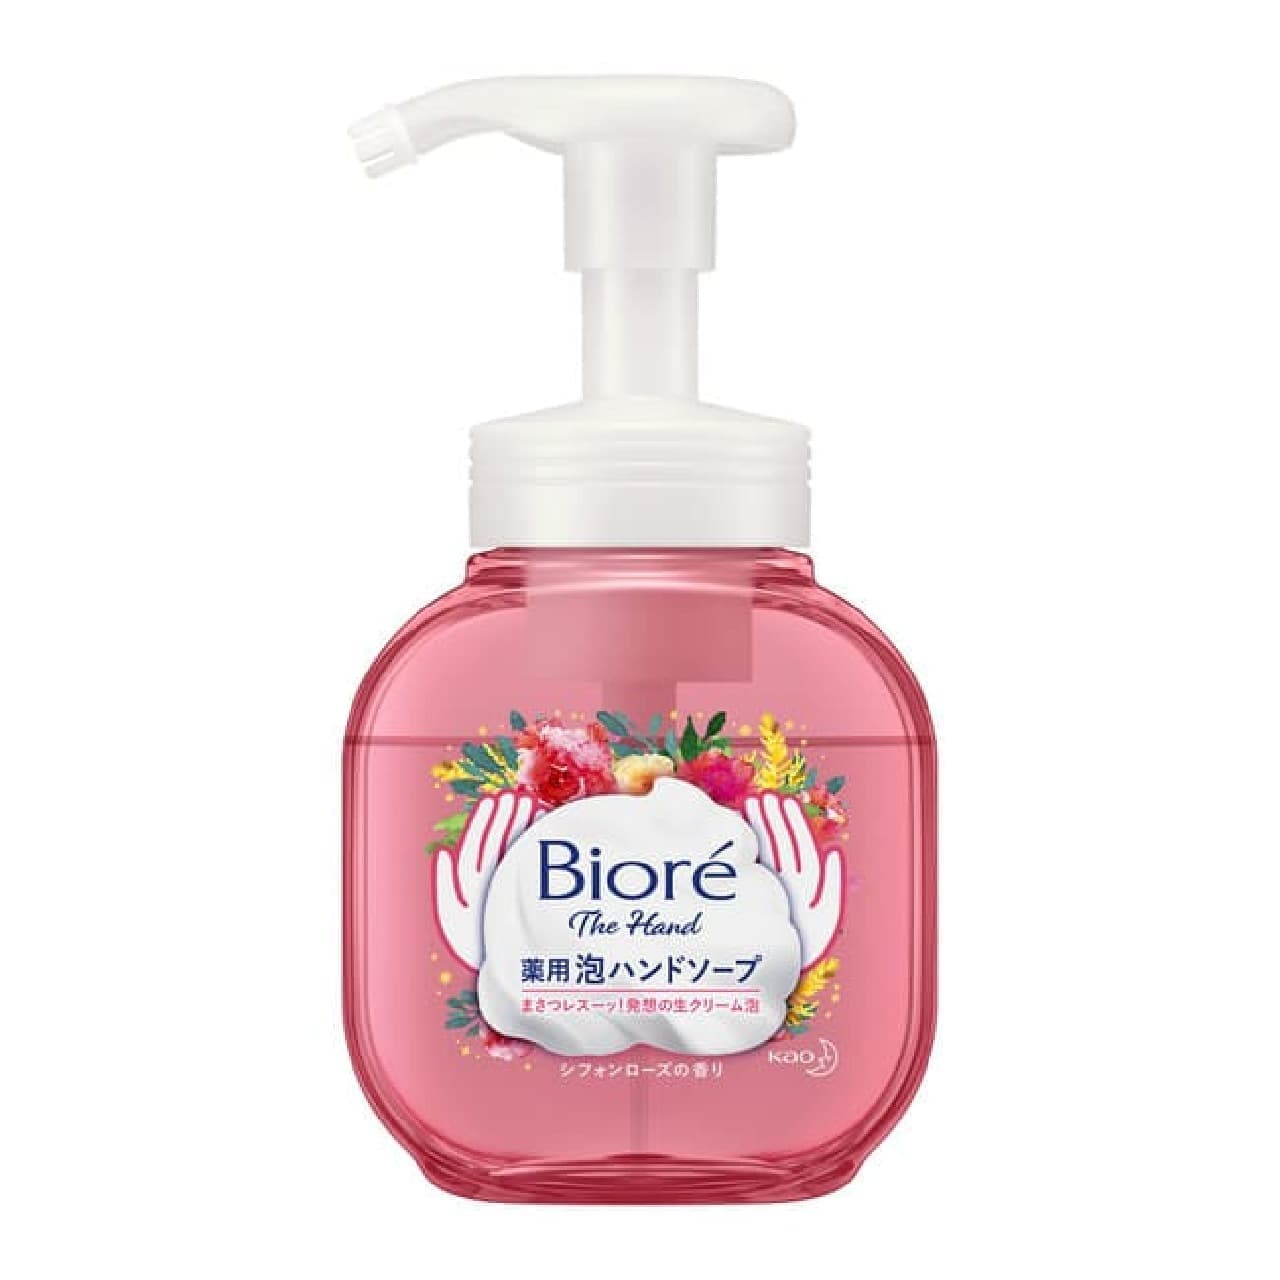 Introducing "Bioregard Medicinal Foam Disinfectant" --New foam hand soap and hand emulsion